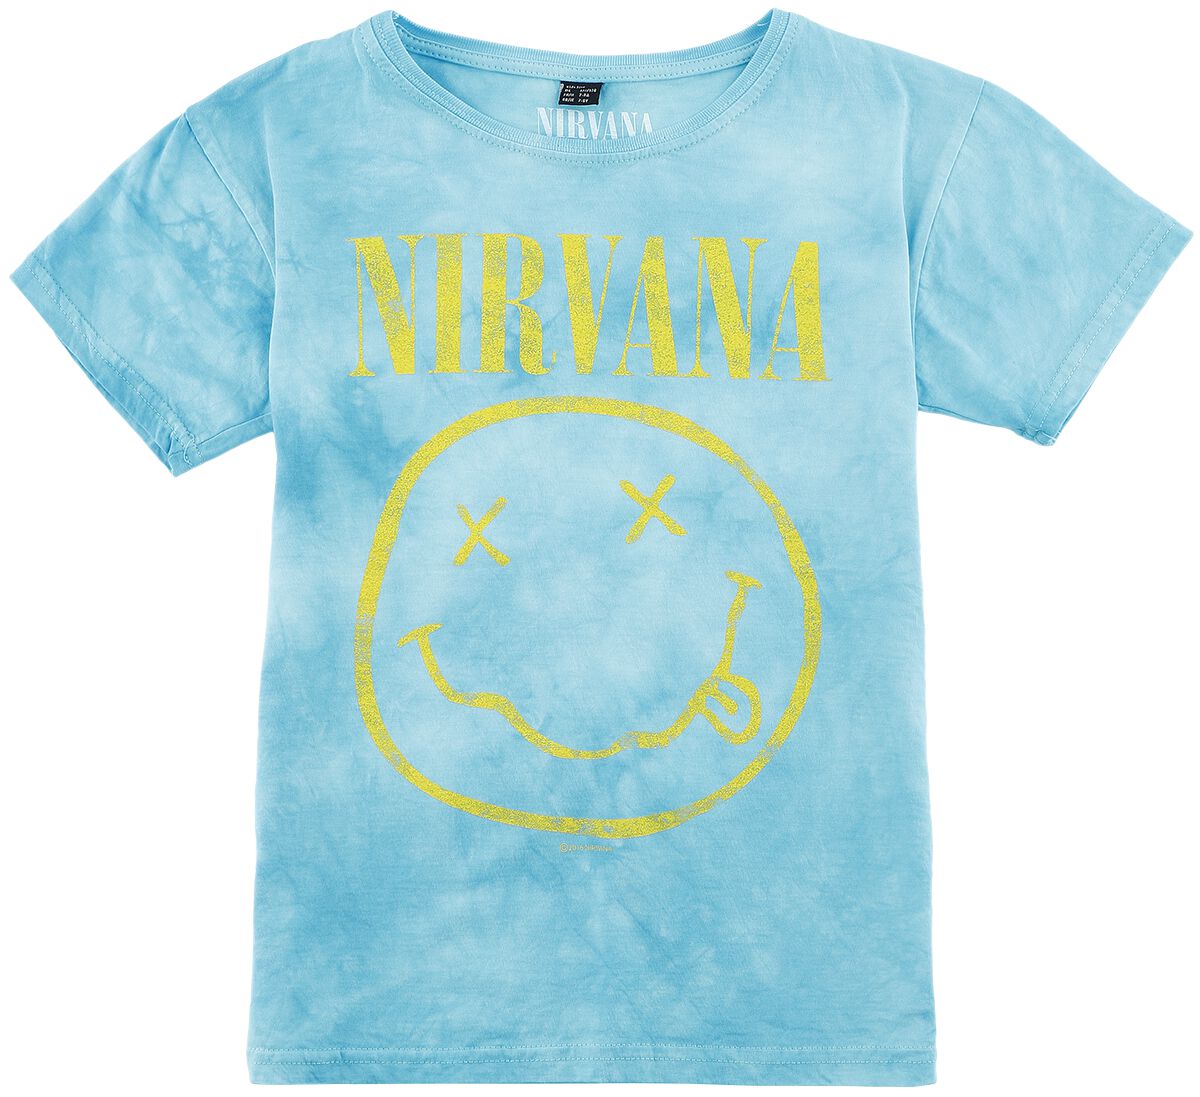 T-shirt de Nirvana - Kids - Smiley - 110/116 à 158/164 - pour filles & garçonse - bleu clair